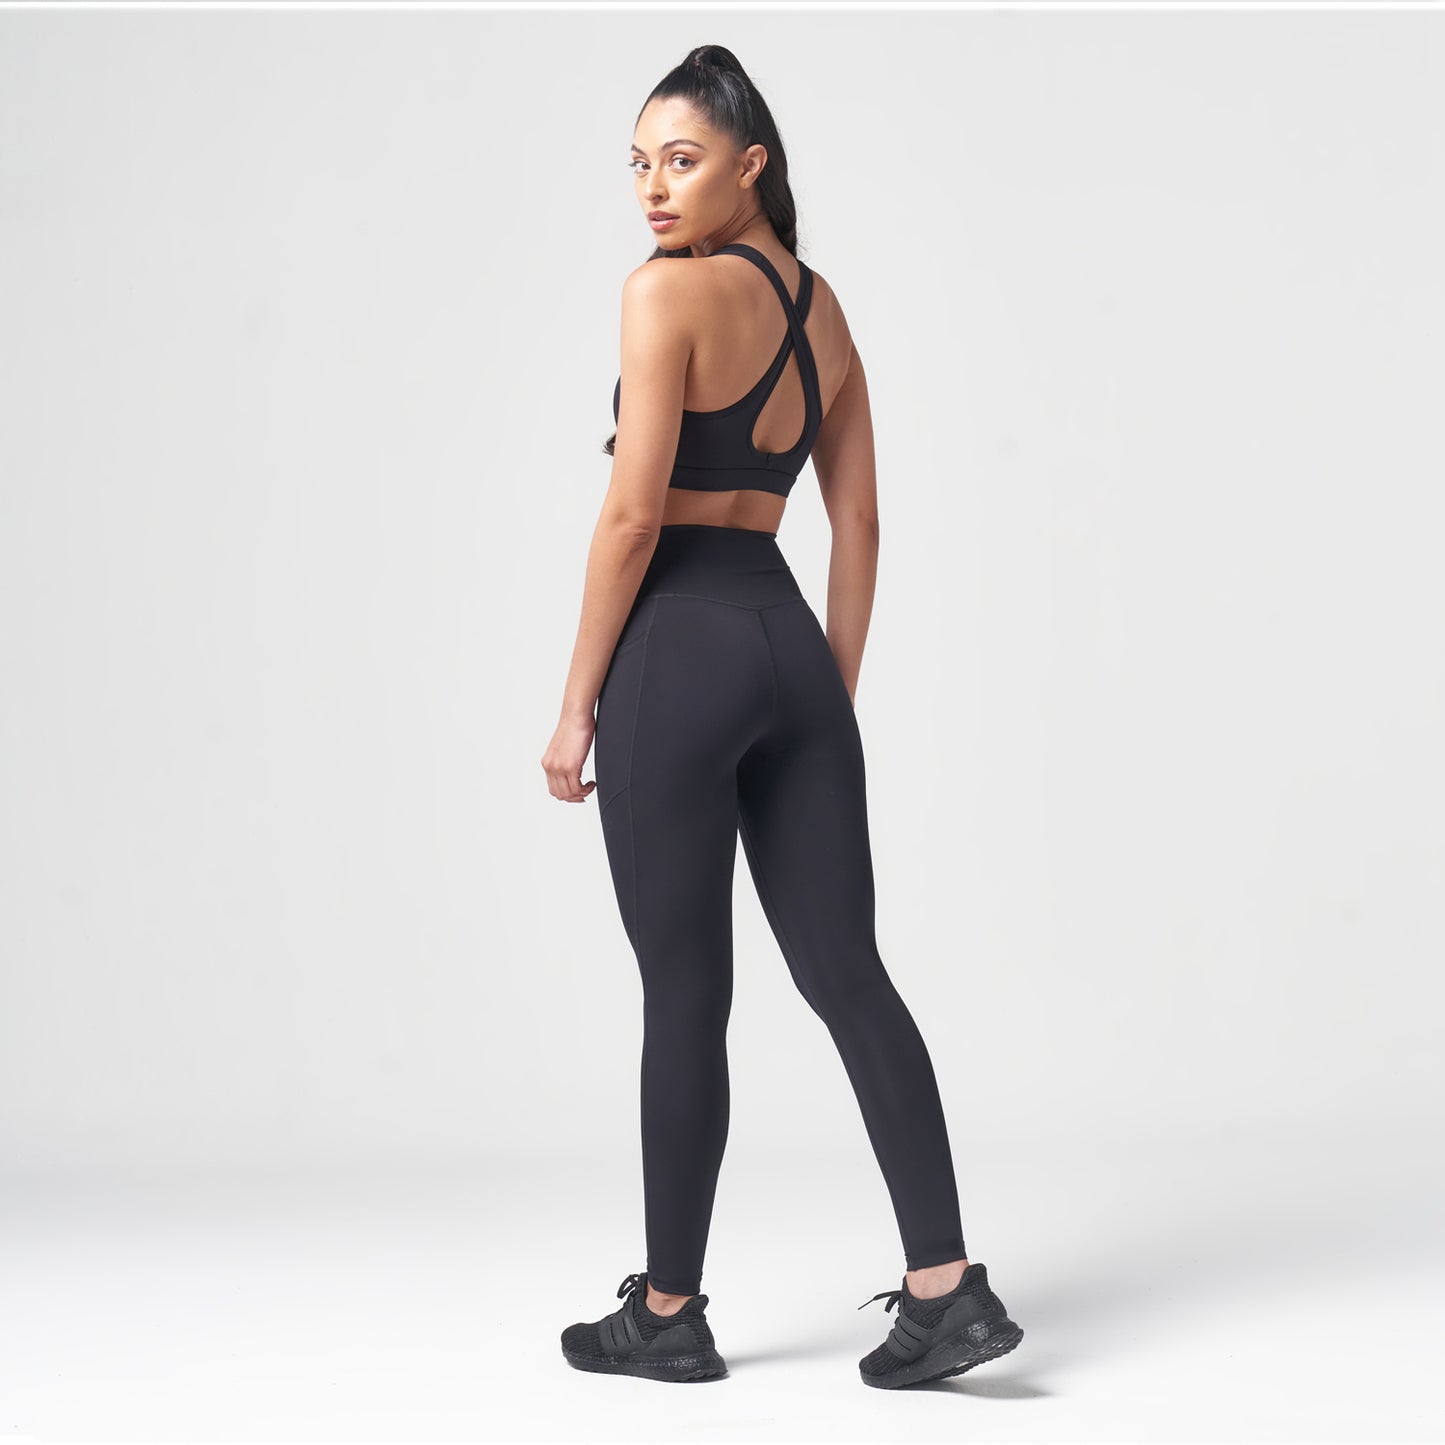 squatwolf-workout-clothes-essential-medium-impact-bra-black-sports-bra-for-gym